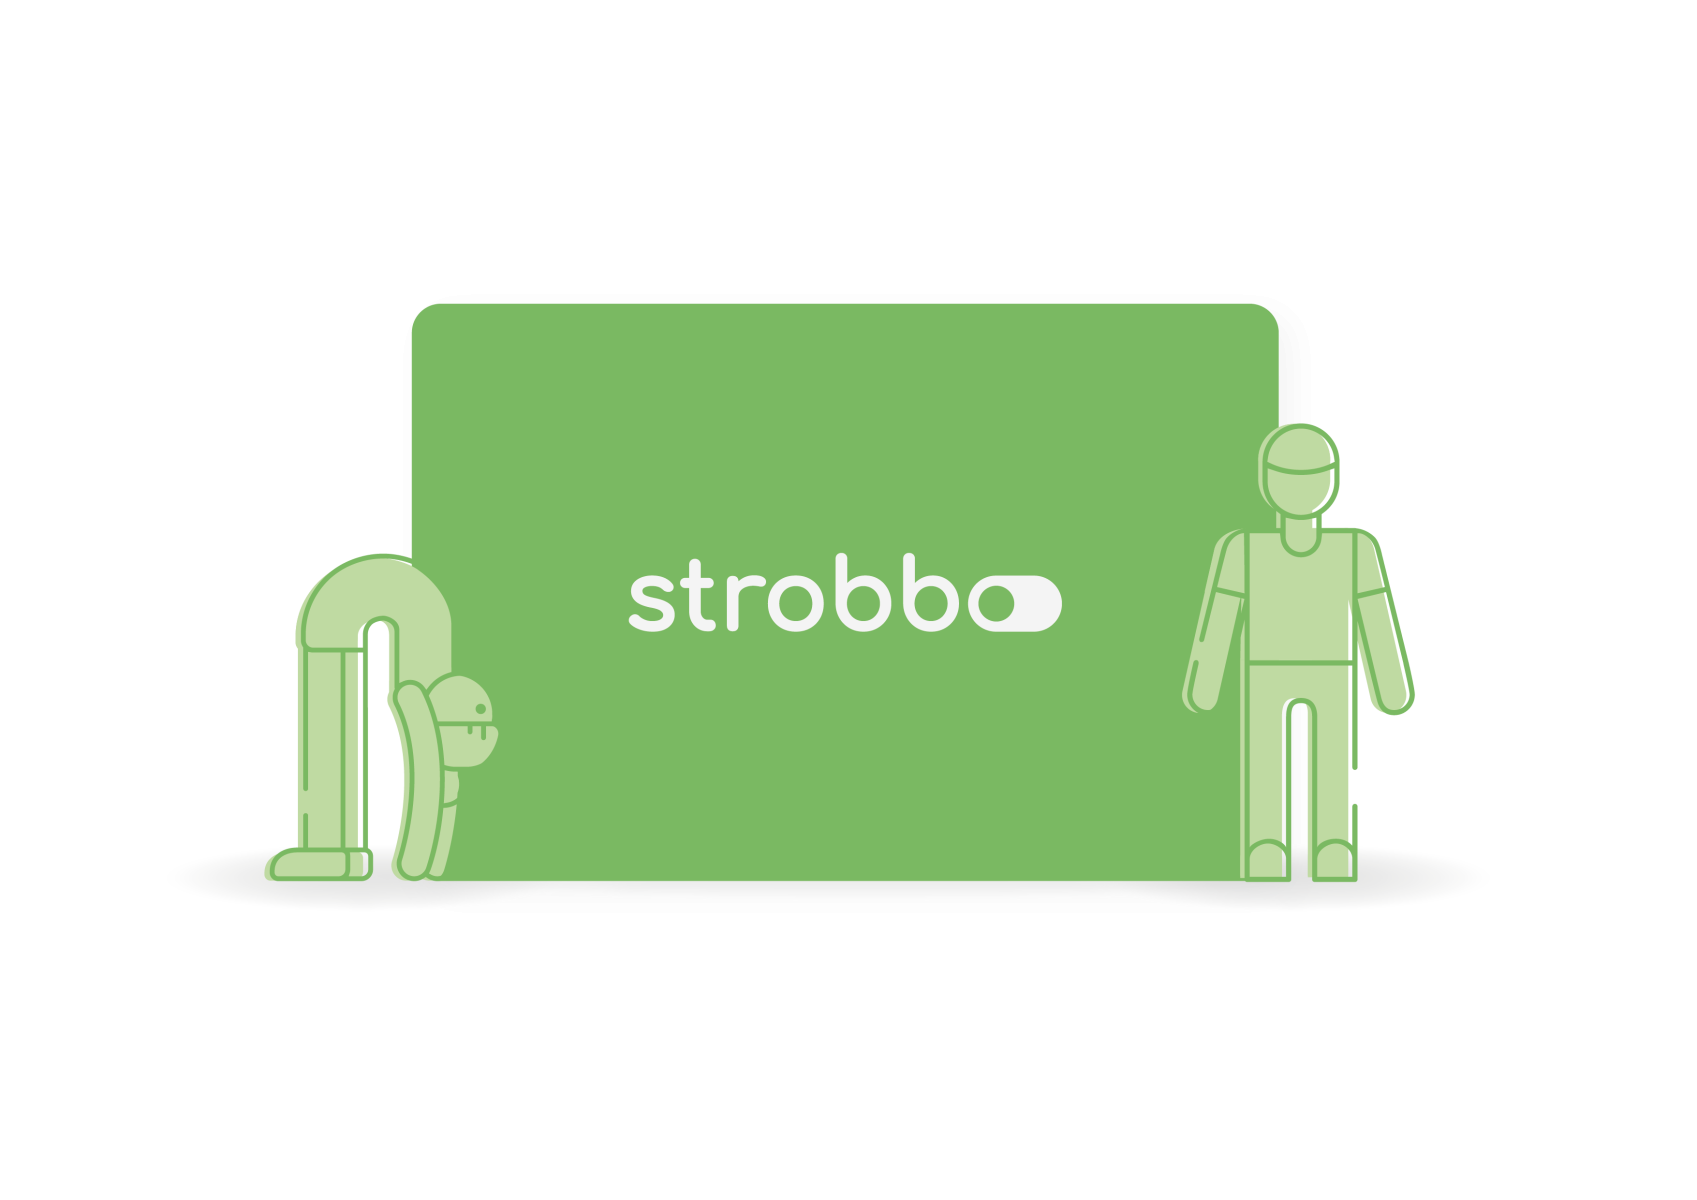 Strobbo tool logo